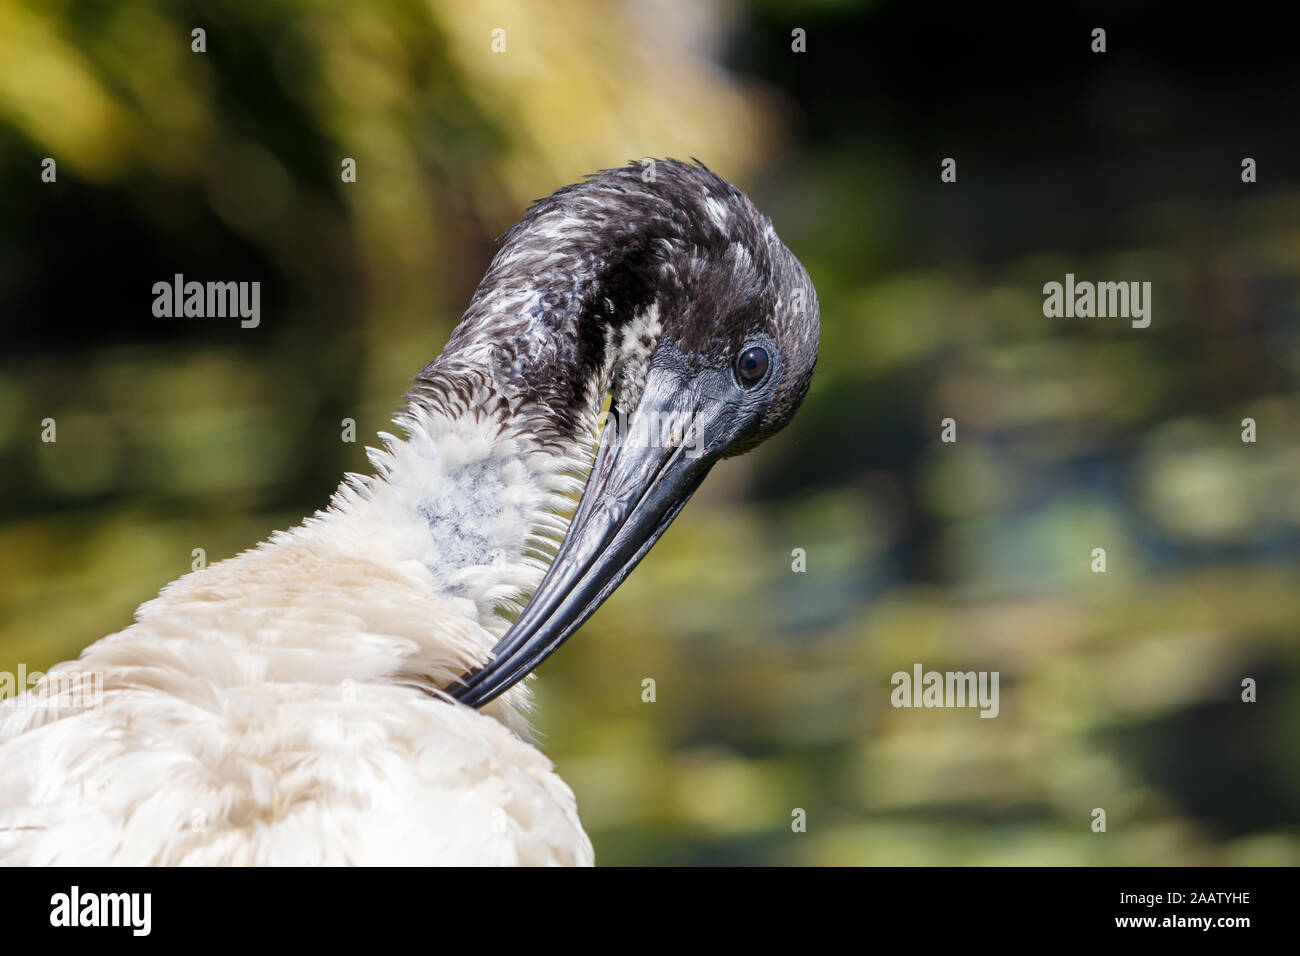 Black and White Australian White Ibis close up head shot Stock Photo